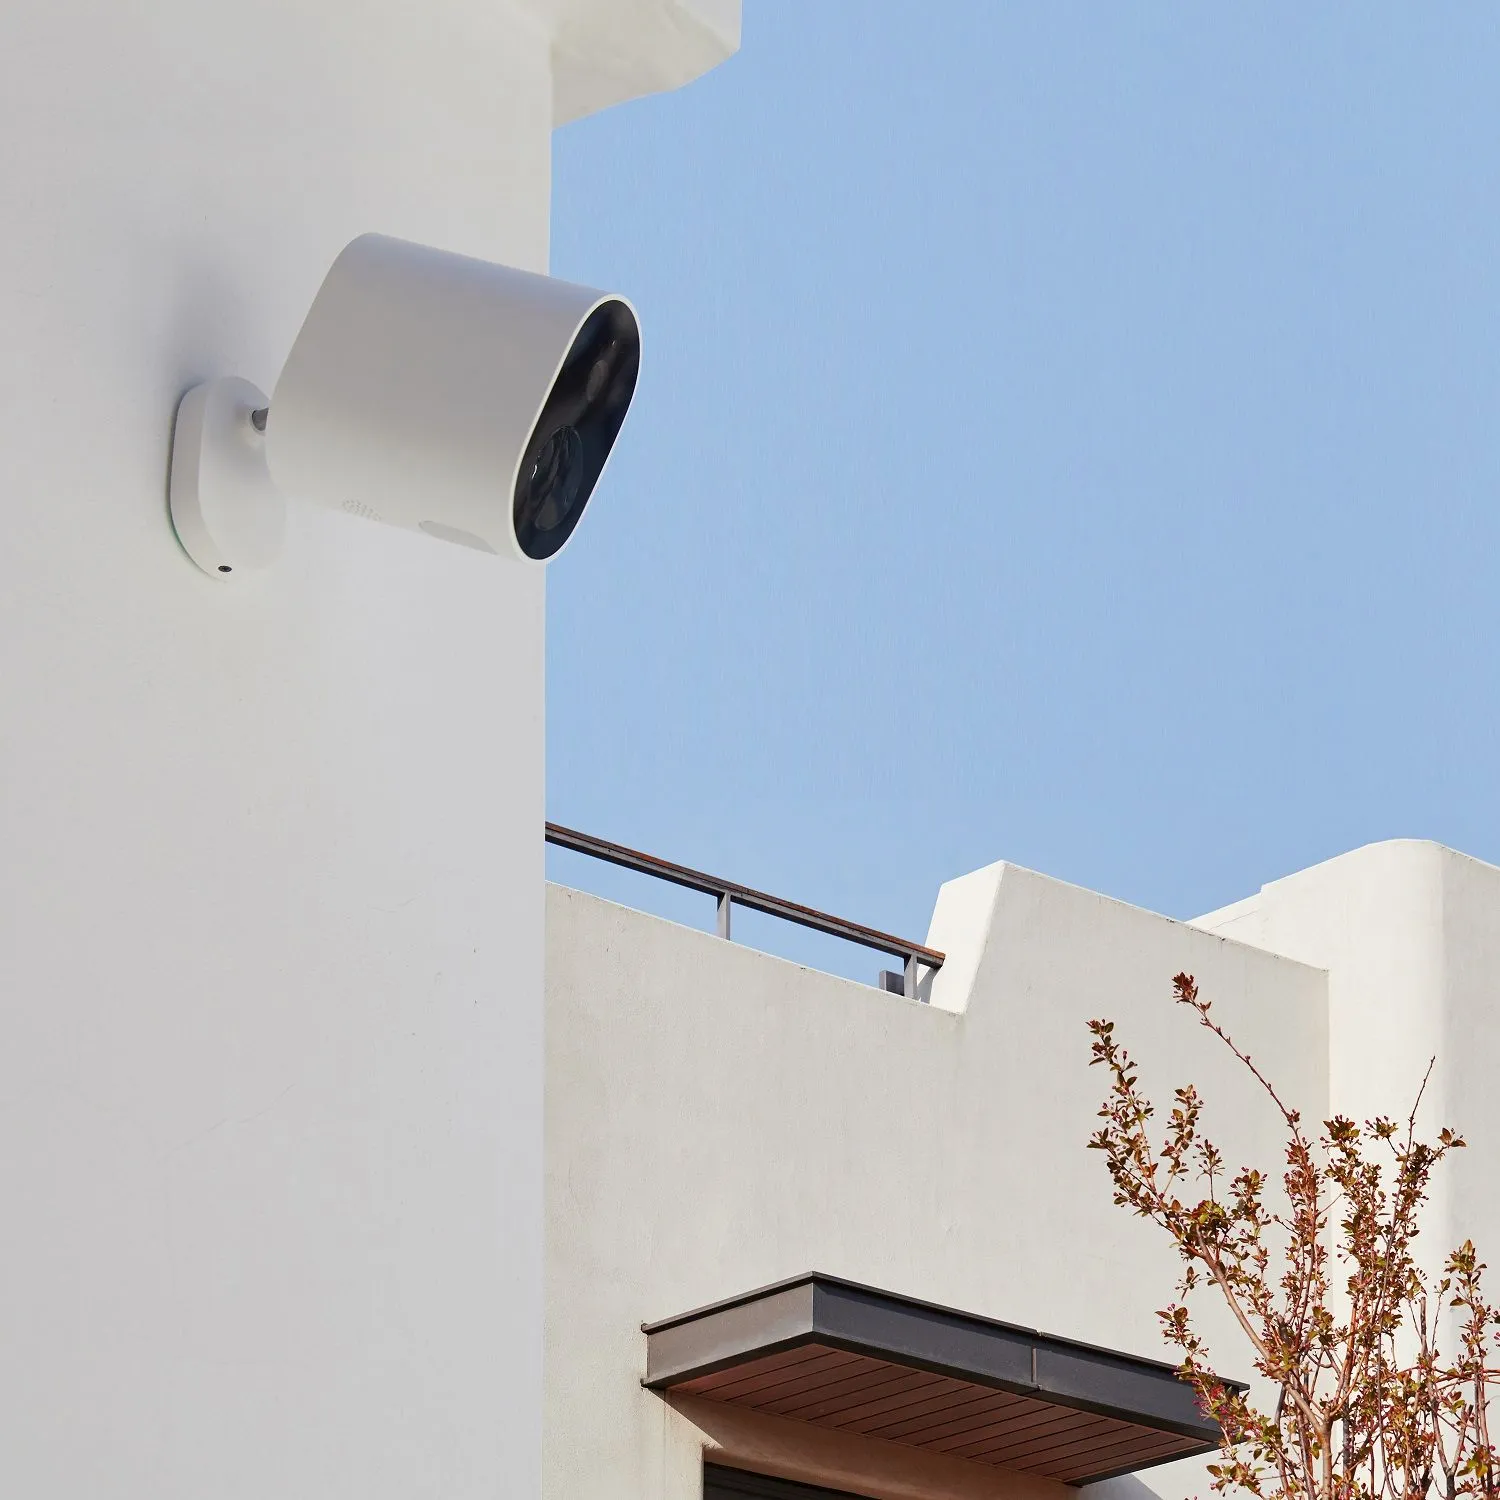 Mi Wireless Outdoor Security Cam (B-Ware)